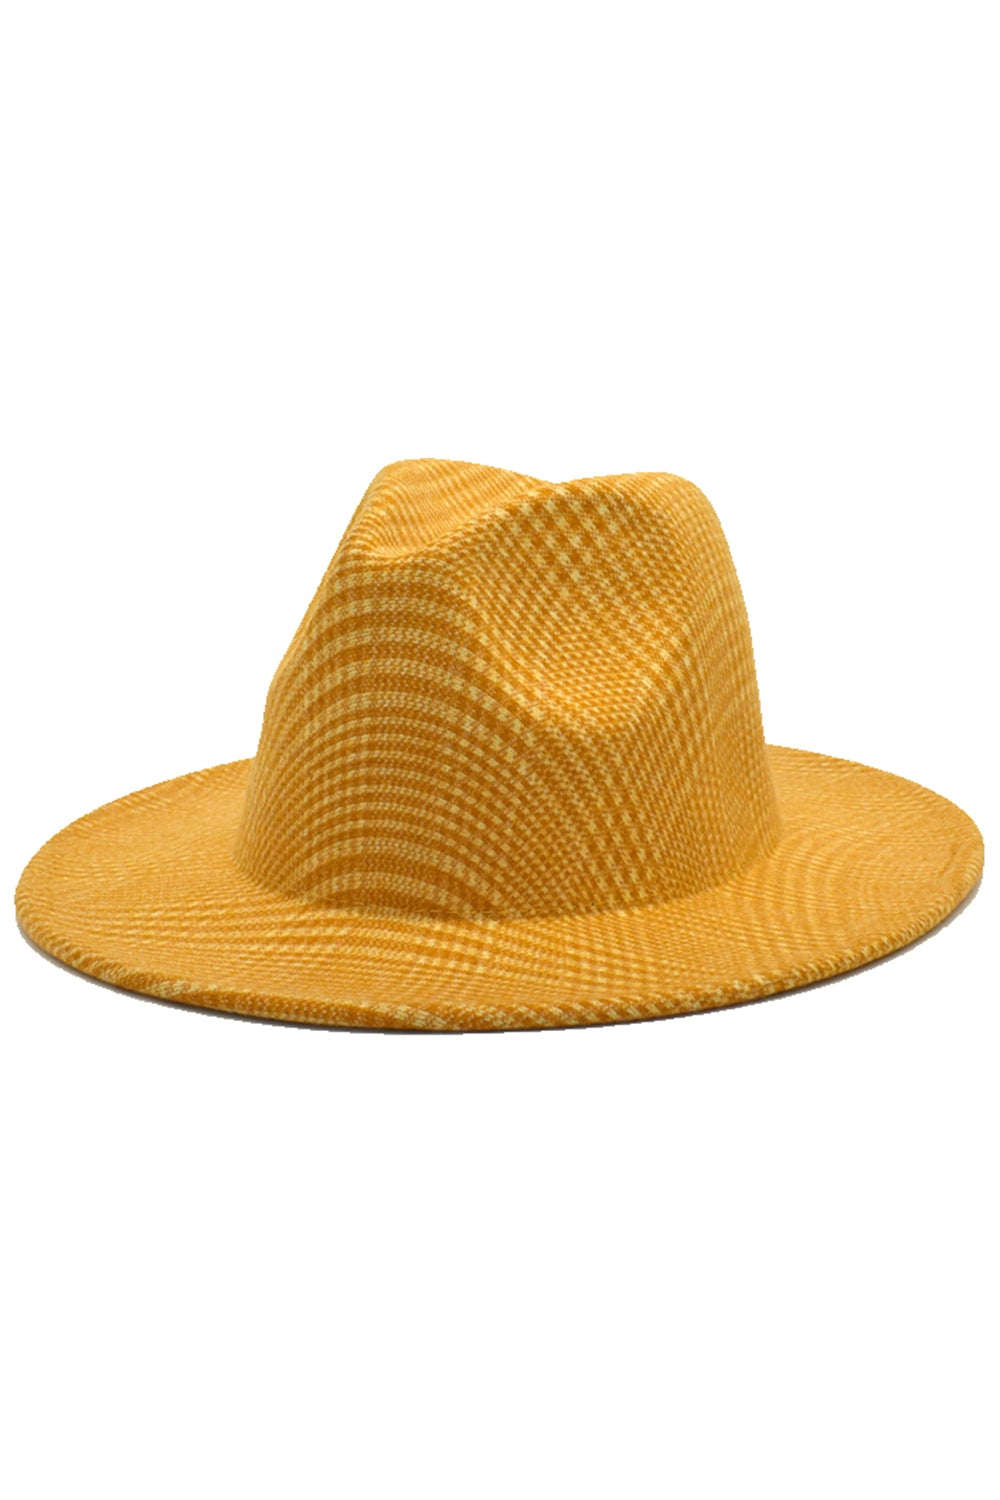 Yellow 1920s Fedora Bowler Hat